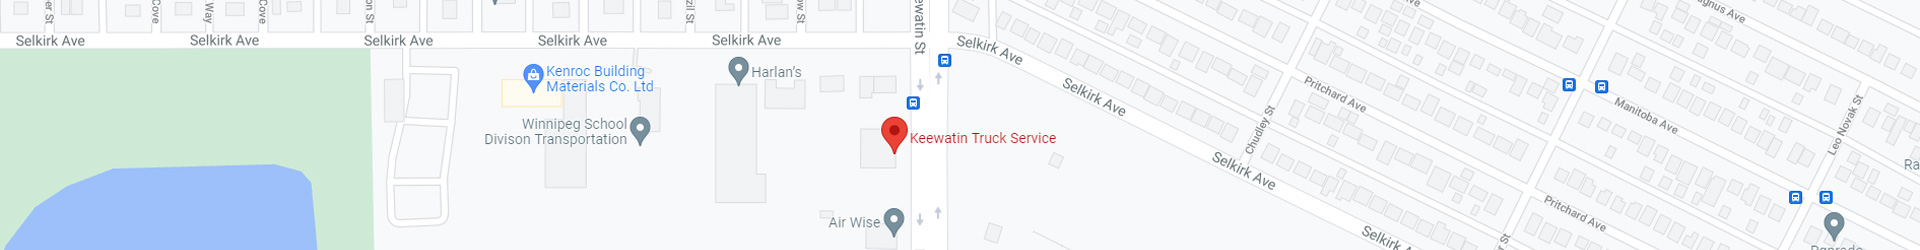 Keewatin Truck Service